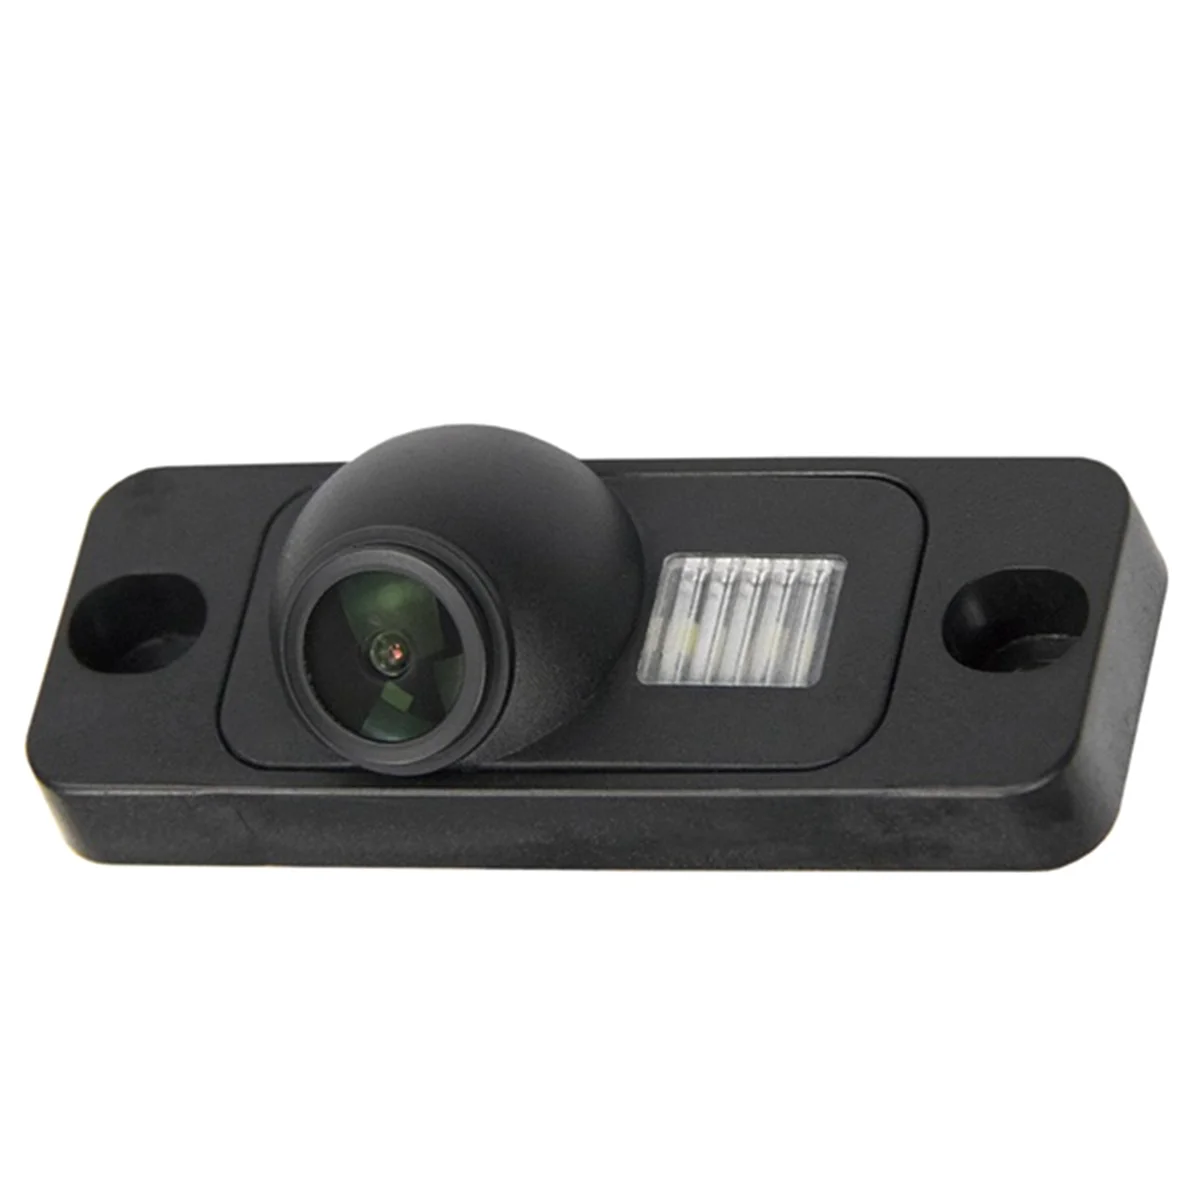 

Backup Camera HD 1280X720P Rear View Parking Camera for Mercedes W220 W164 W163 ML320/ML350/ML400